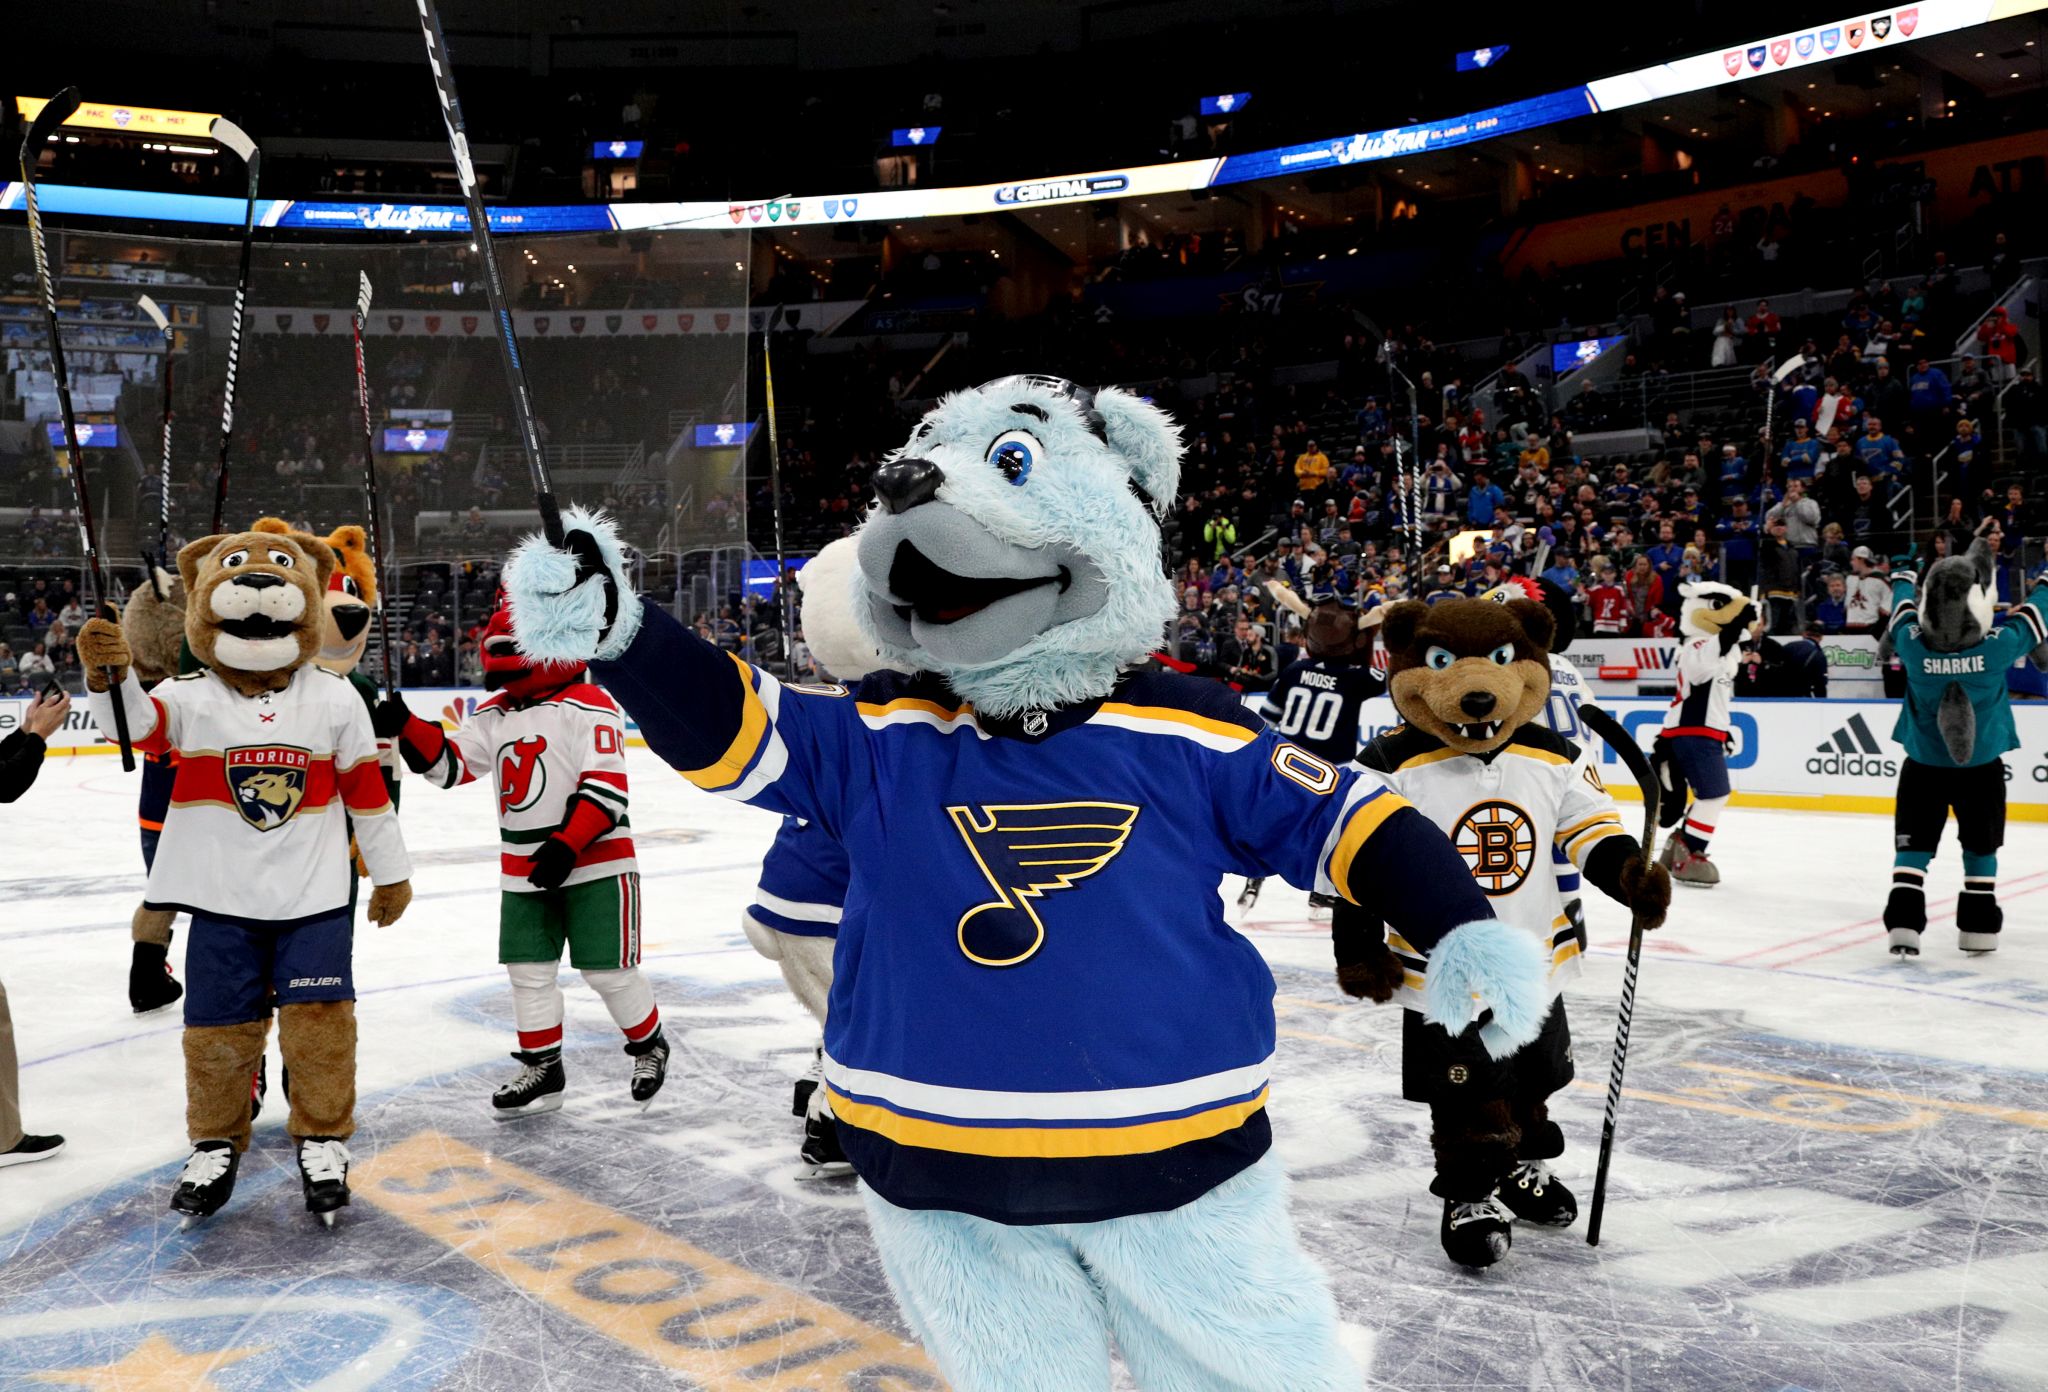 St. Louis Blues's Louie fourth-most popular NHL mascot